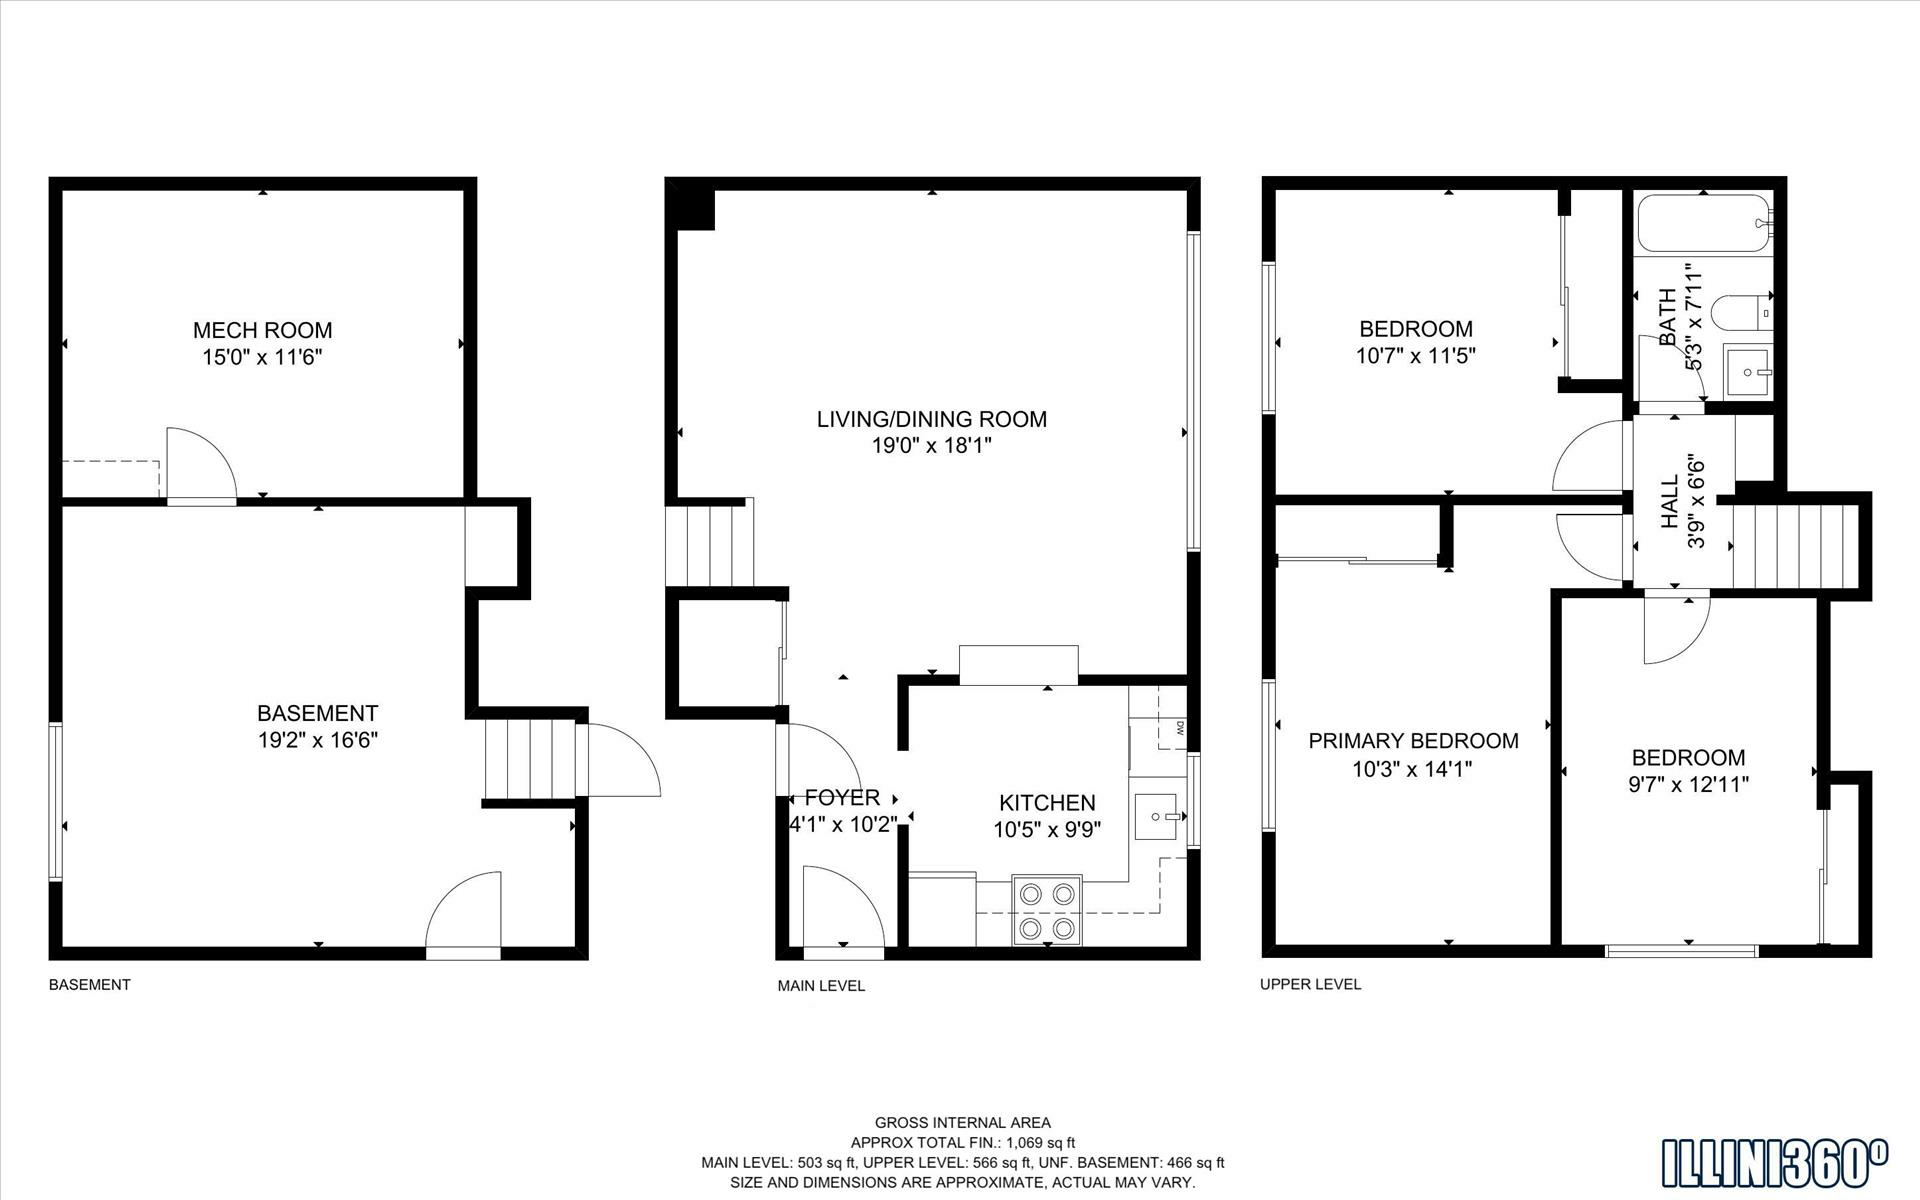 Floor Plan - 1069 sq ft (1).jpg